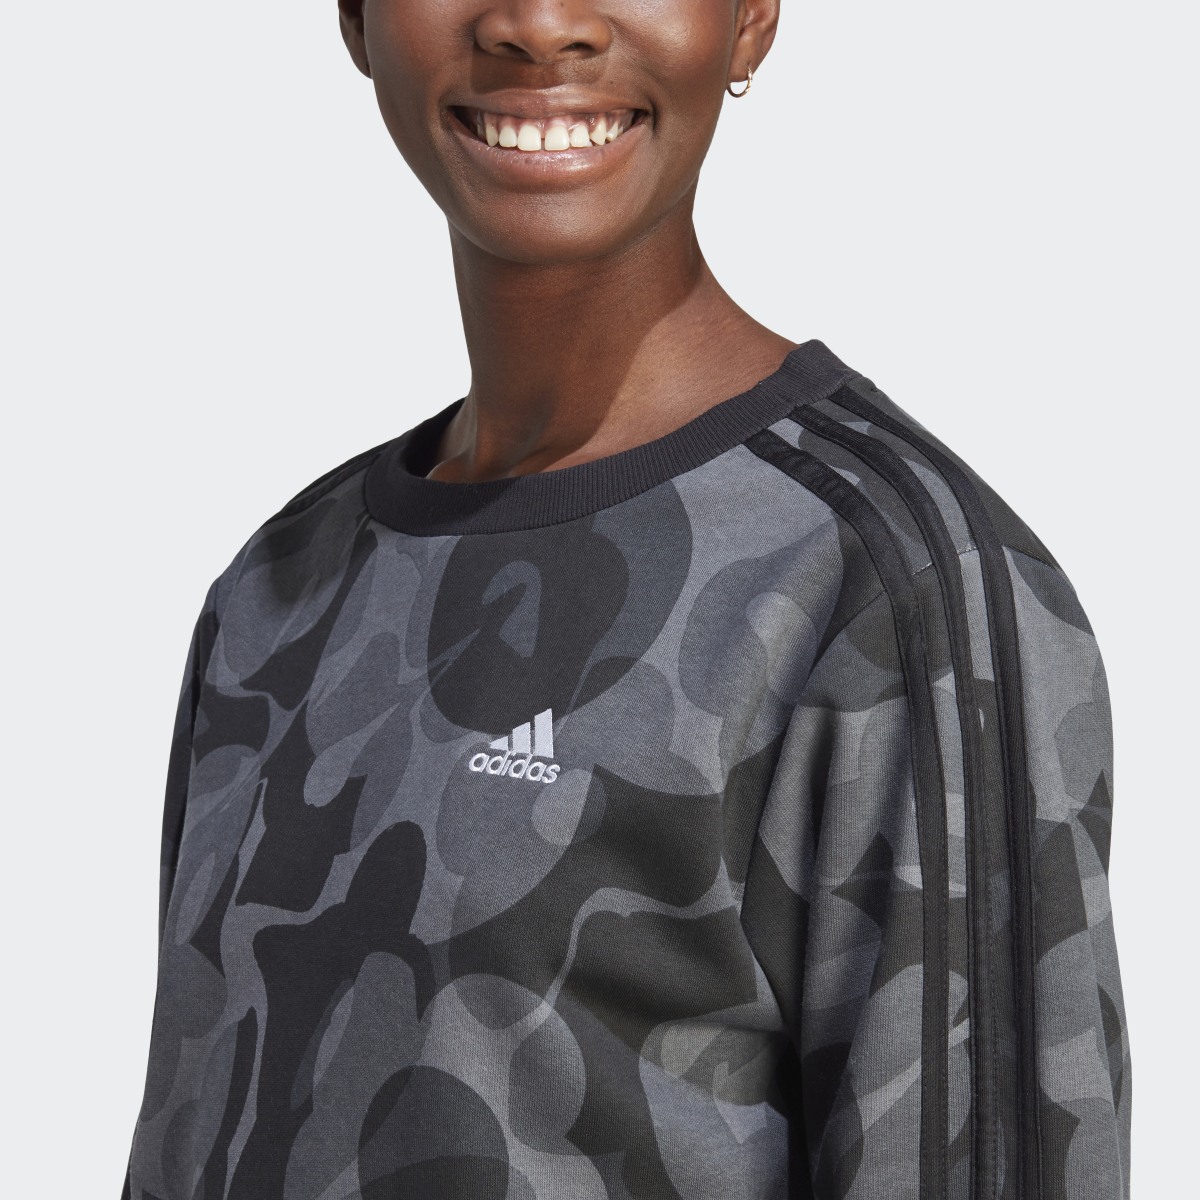 Adidas Floral Graphic 3-Stripes Fleece Sweatshirt. 7